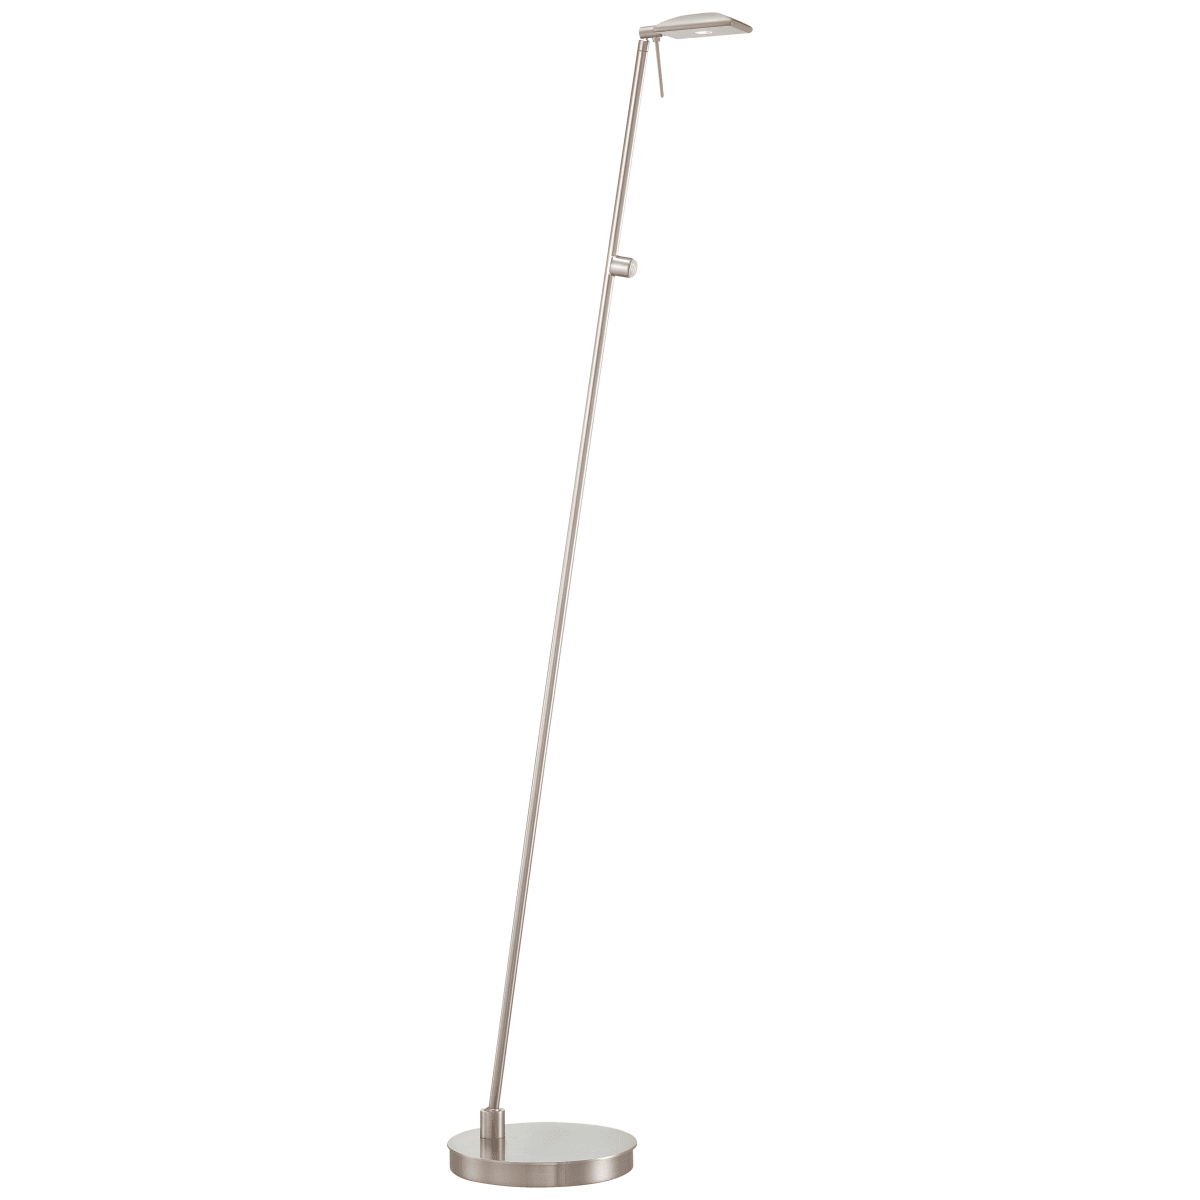 Kovacs P4324-084 Light LED Floor Lamp in Brushed Nickel